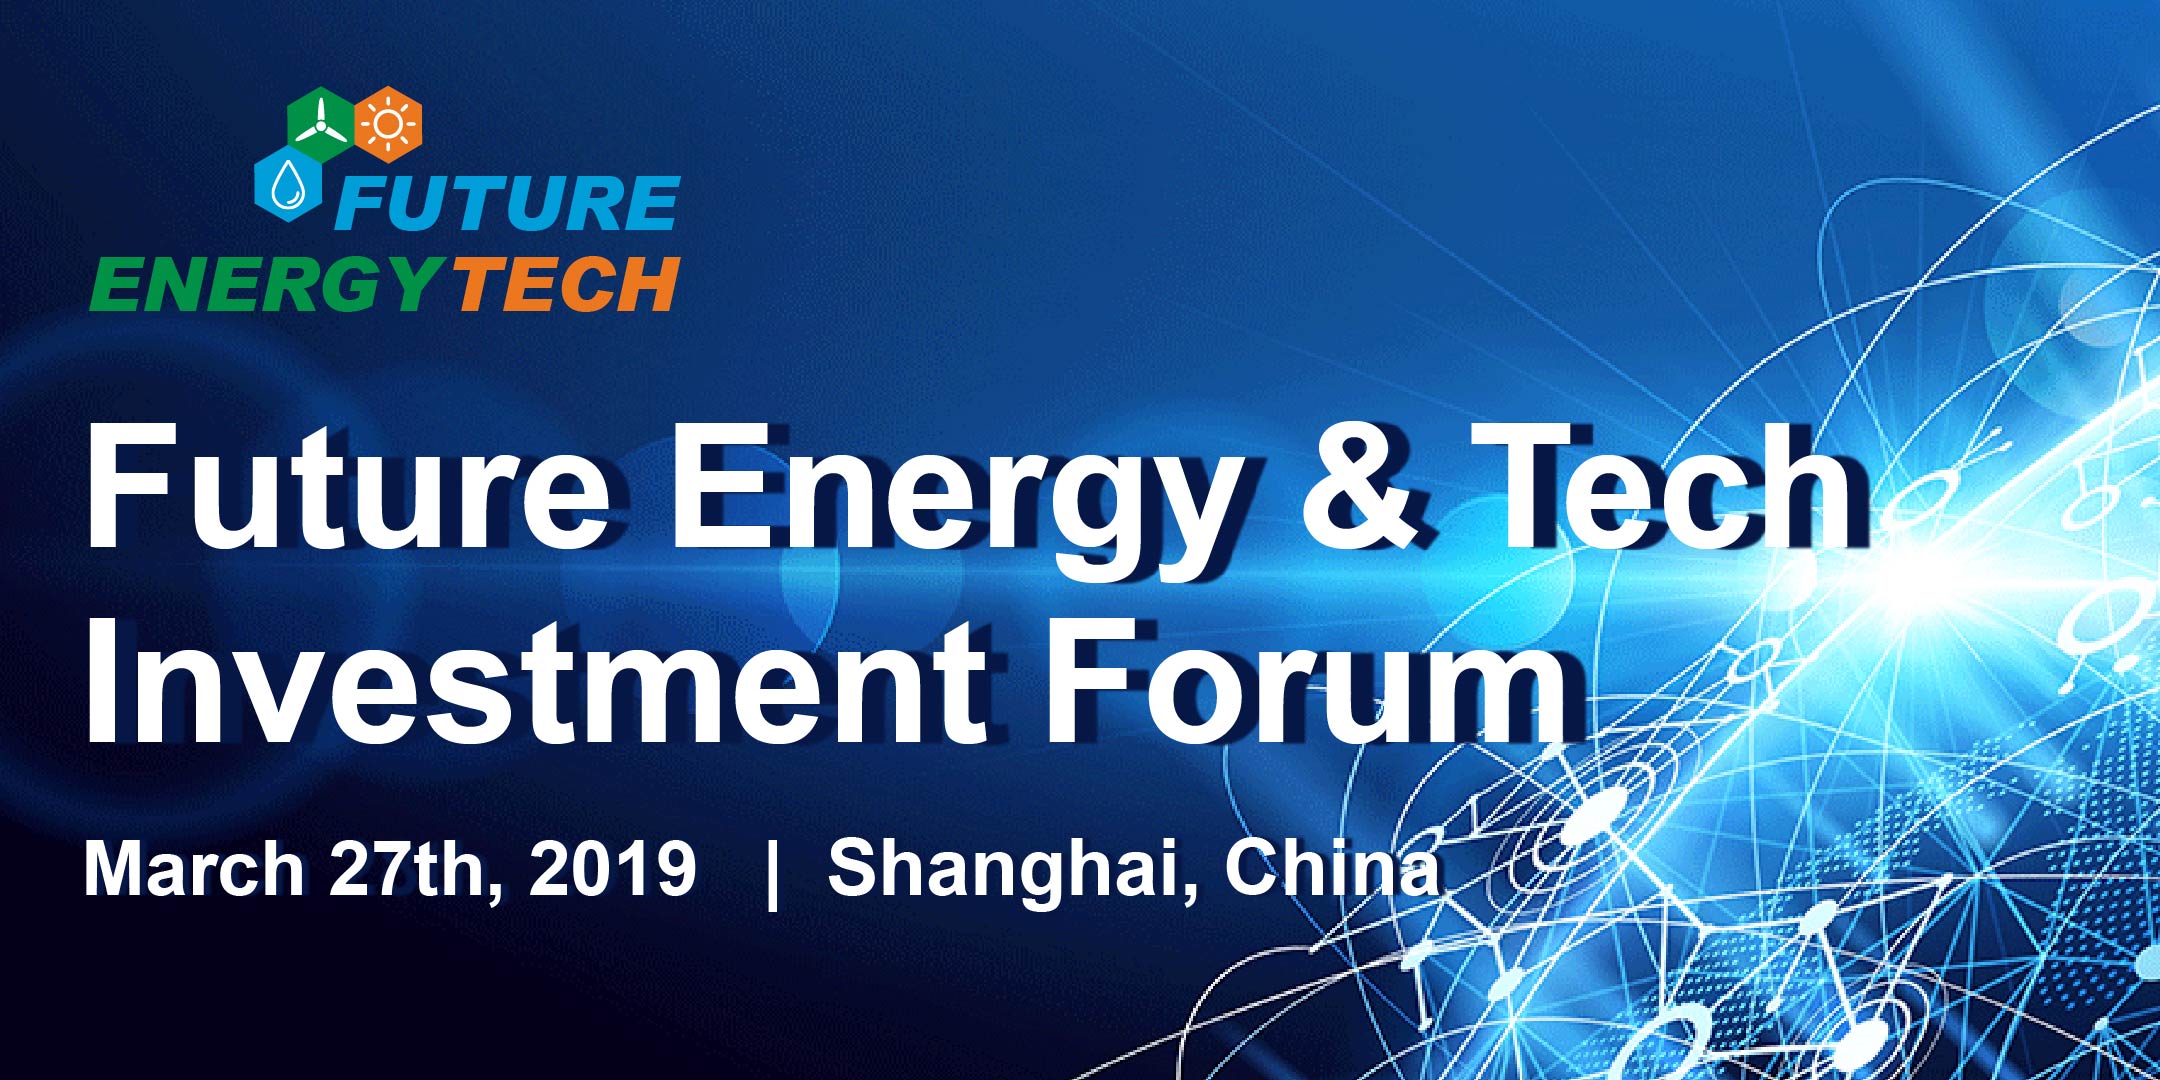 Future Energy & Tech Investment Forum, Shanghai, China